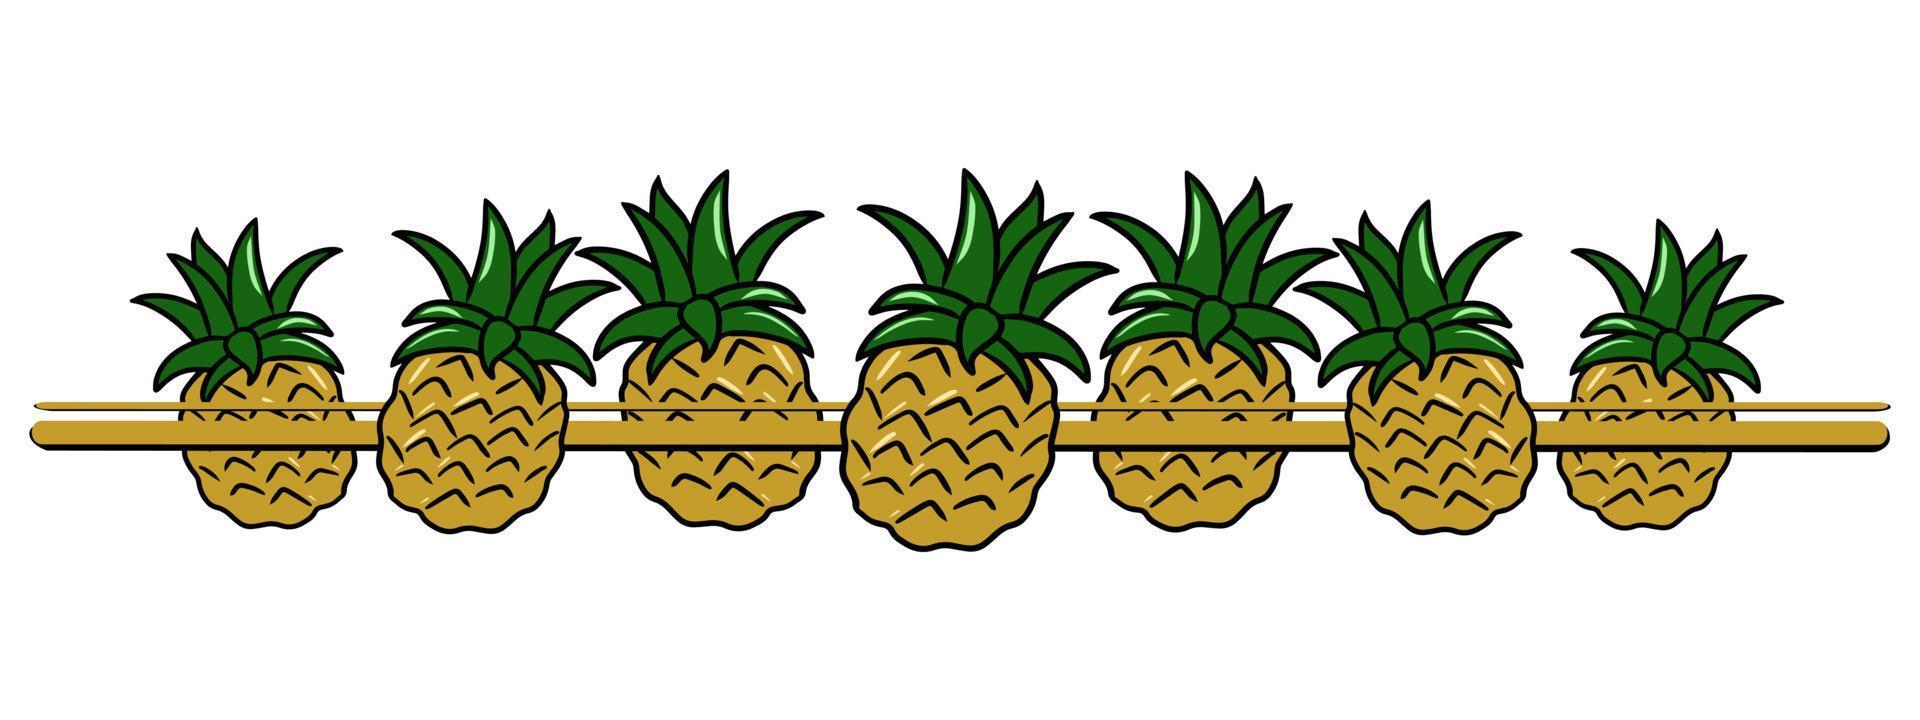 Horizontal border, edge, bright yellow pineapple fruit , cartoon-style vector illustration on a white background